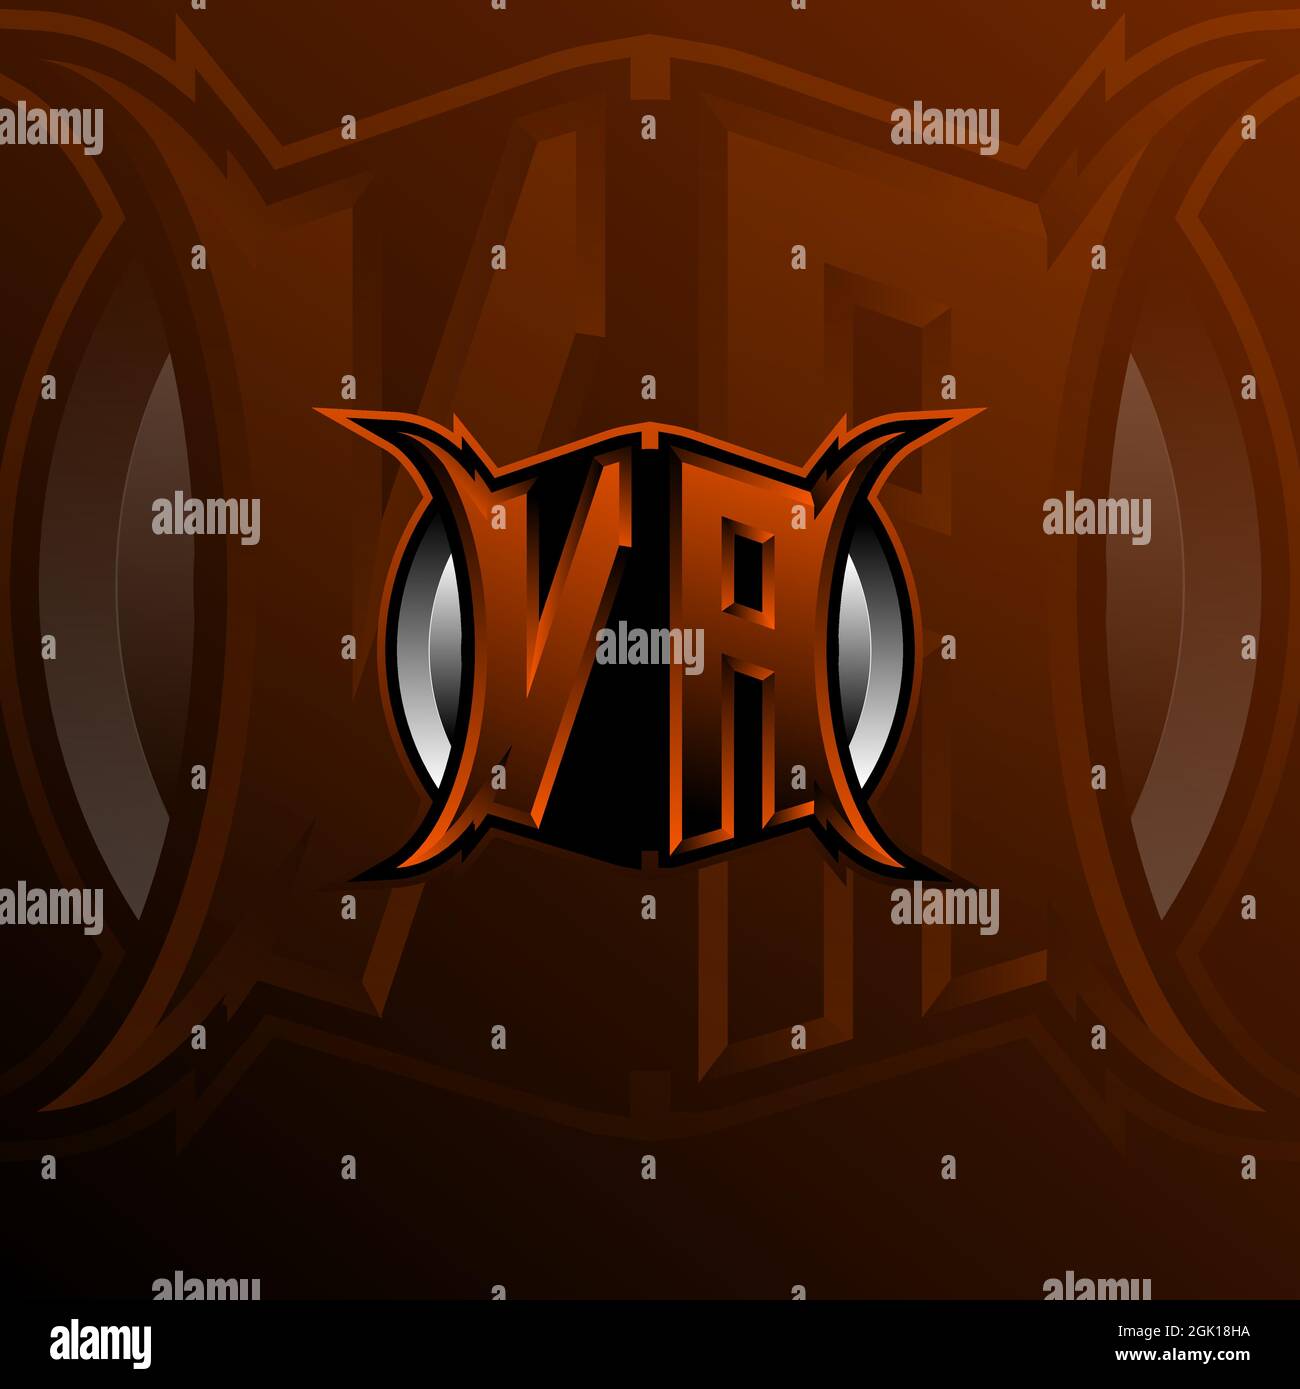 VA Logo Letter Design in Orange Color, Logo for game, esport, initial gaming, community or business. Stock Vector